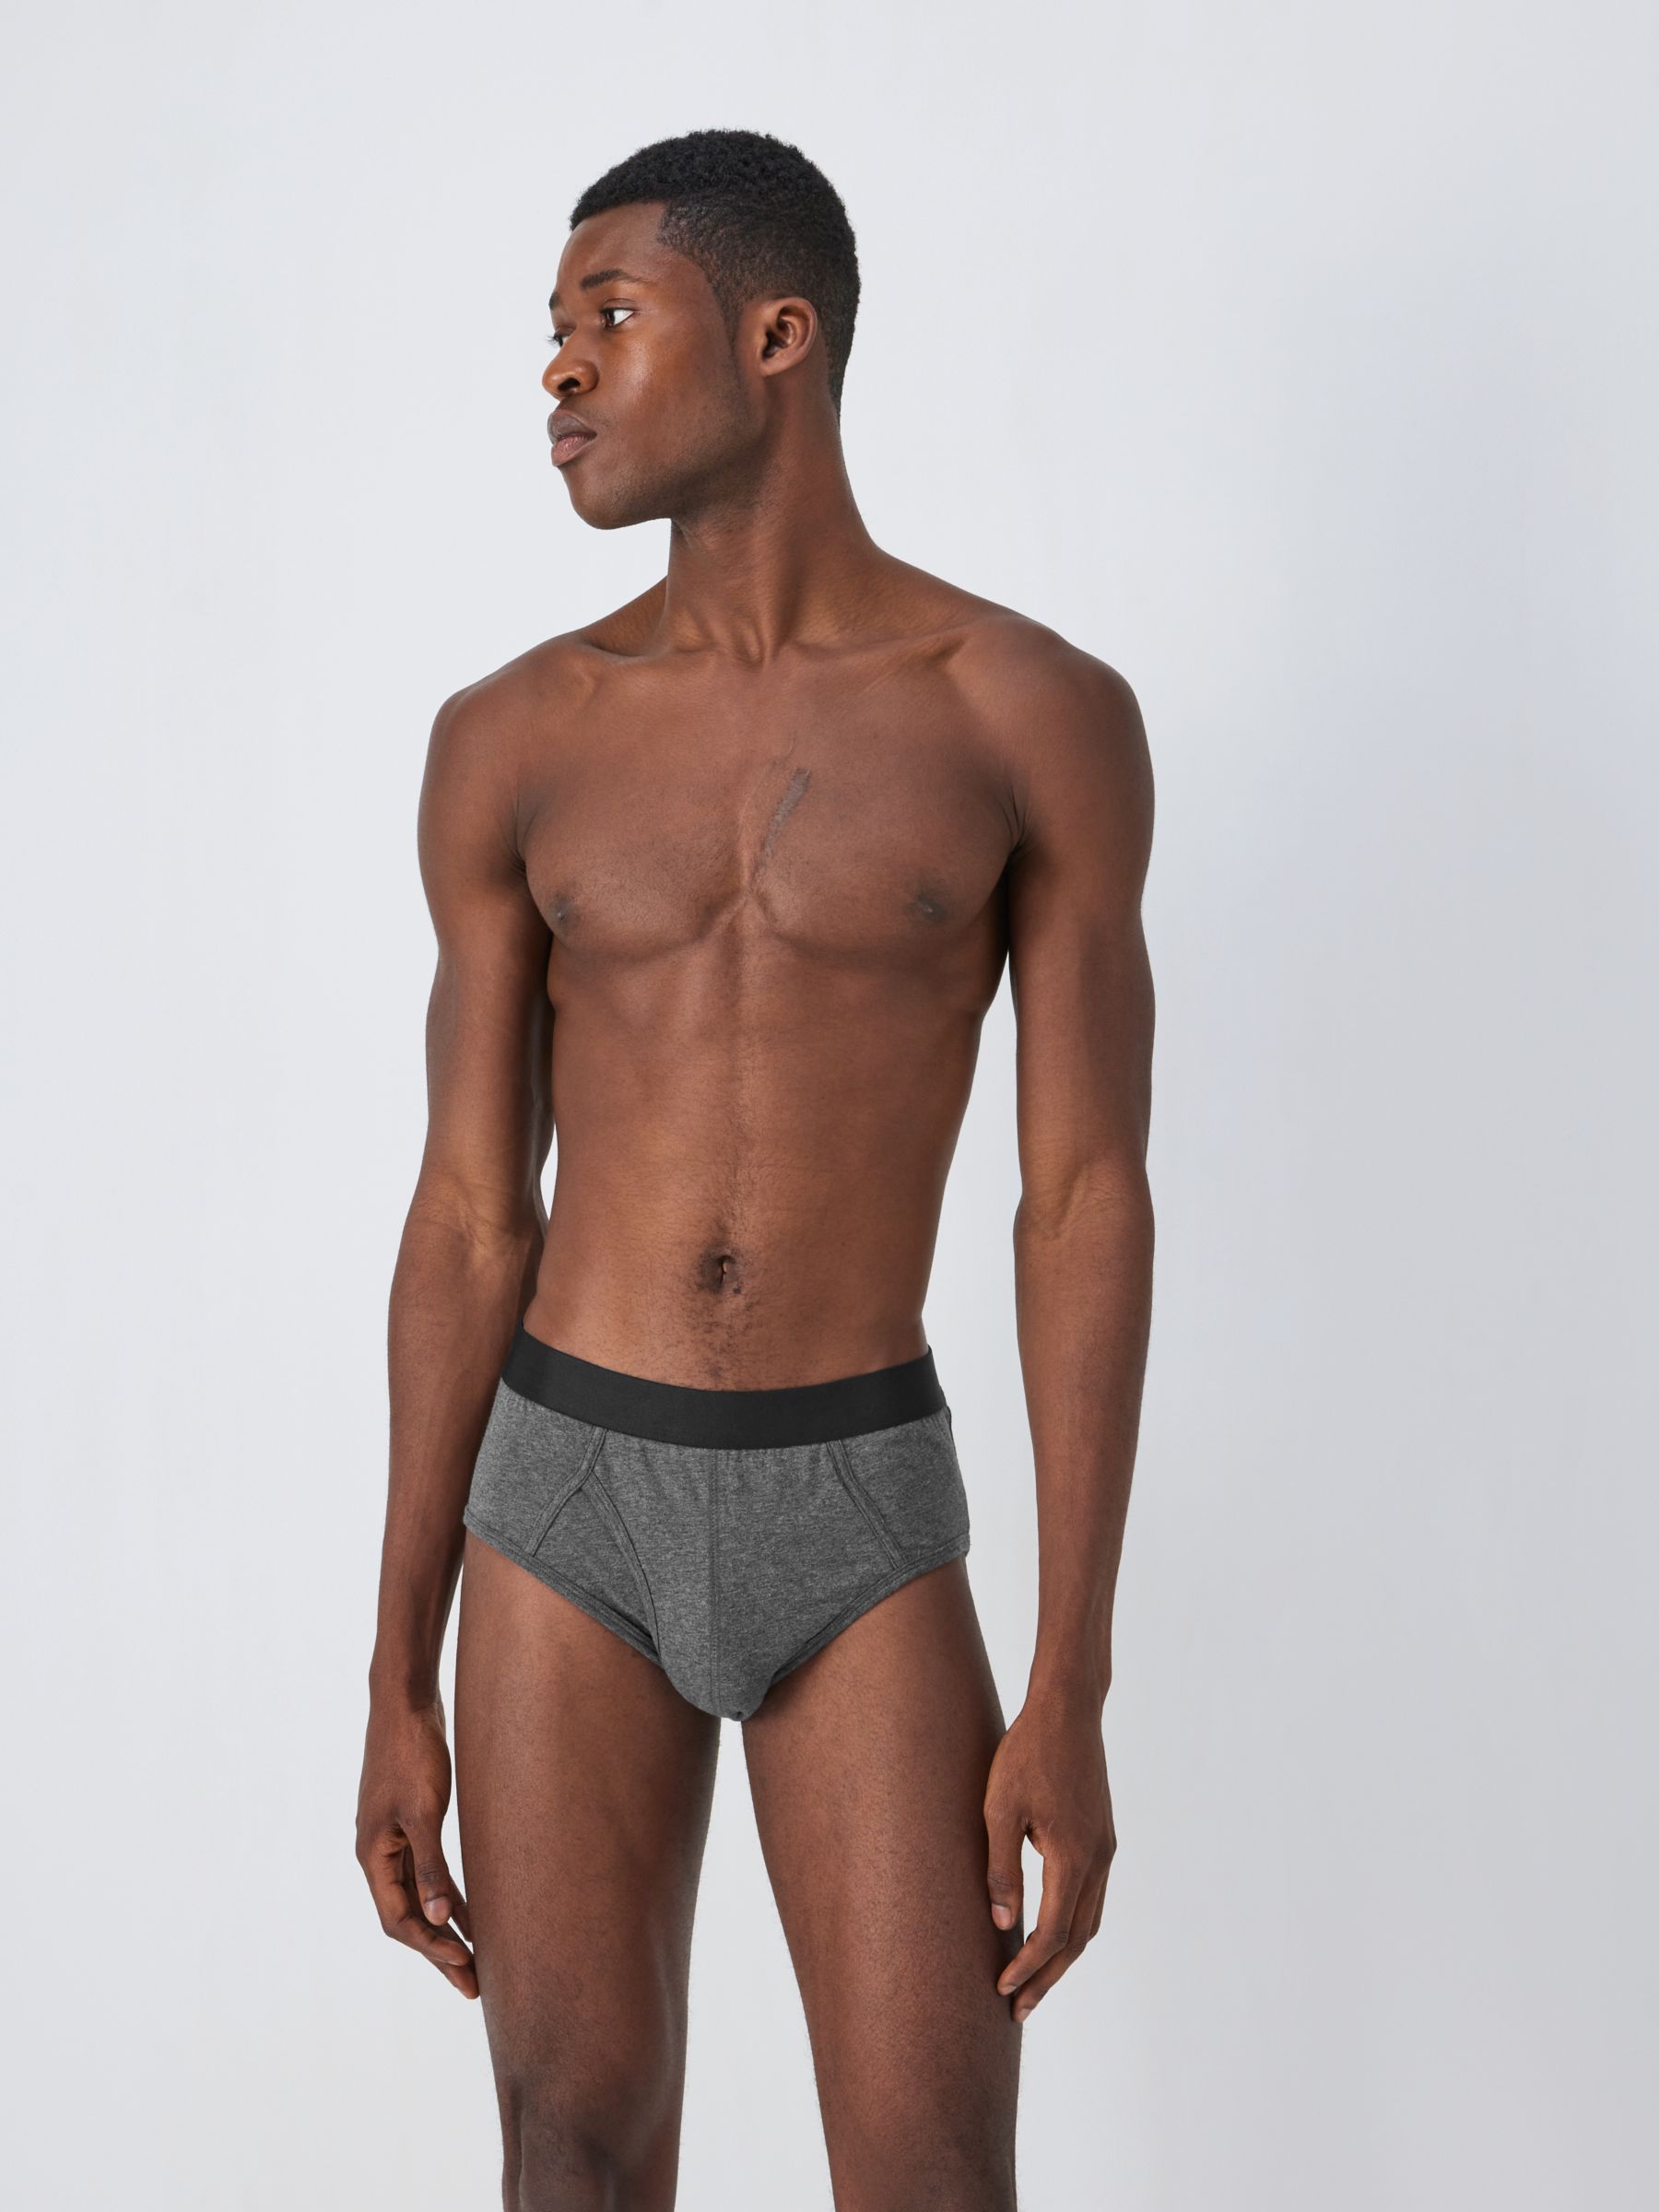 Organic cotton boxer brief - men underwear - basic Khaki